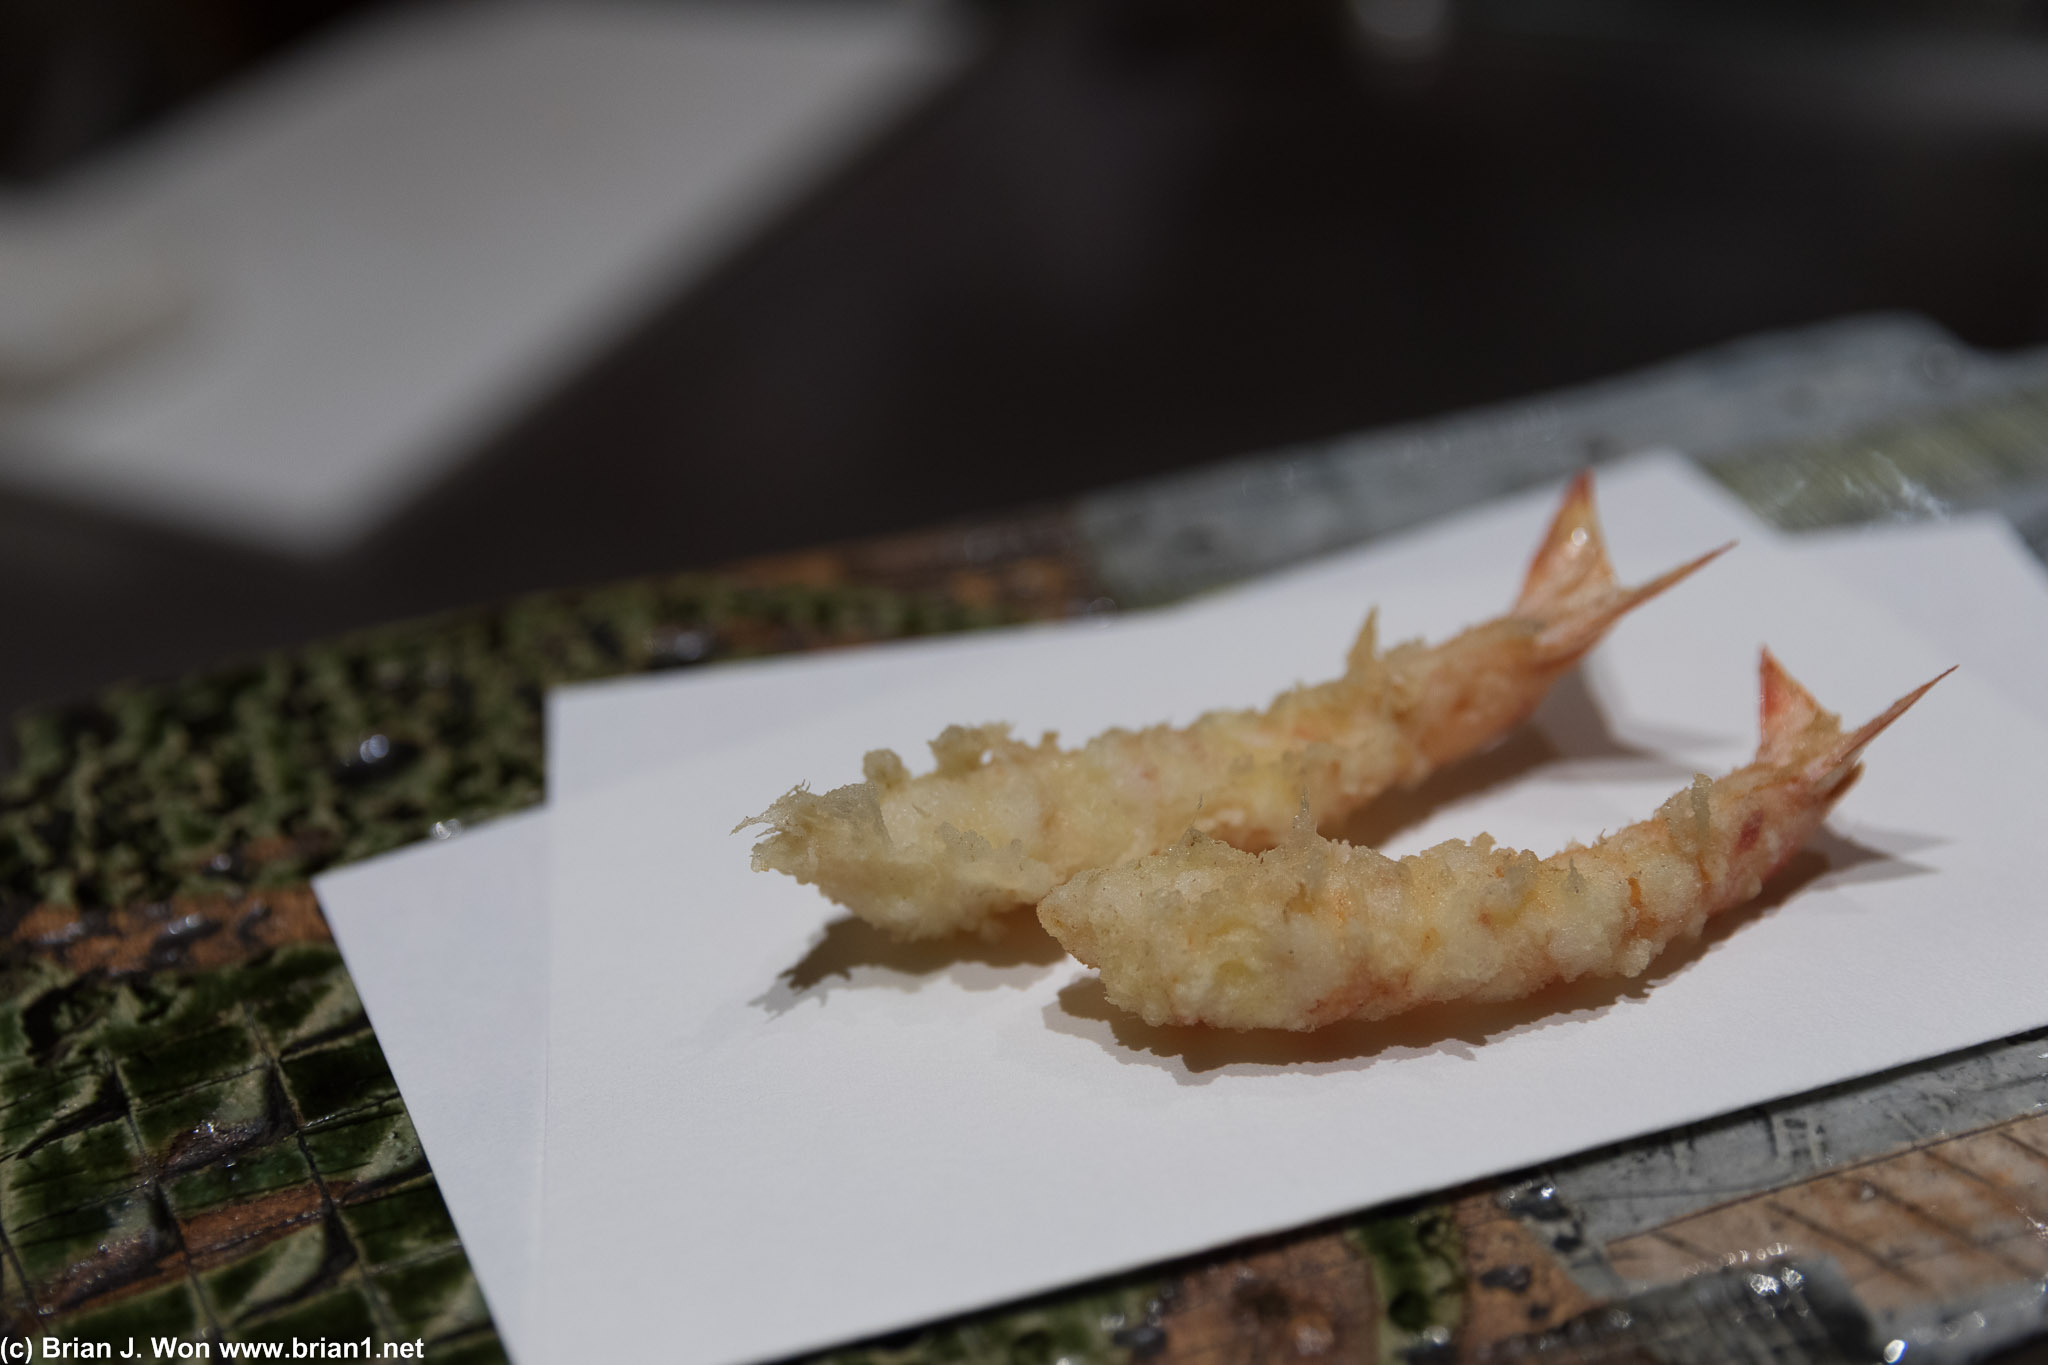 Shrimp. Precisely trimmed, battered, and deep fried.